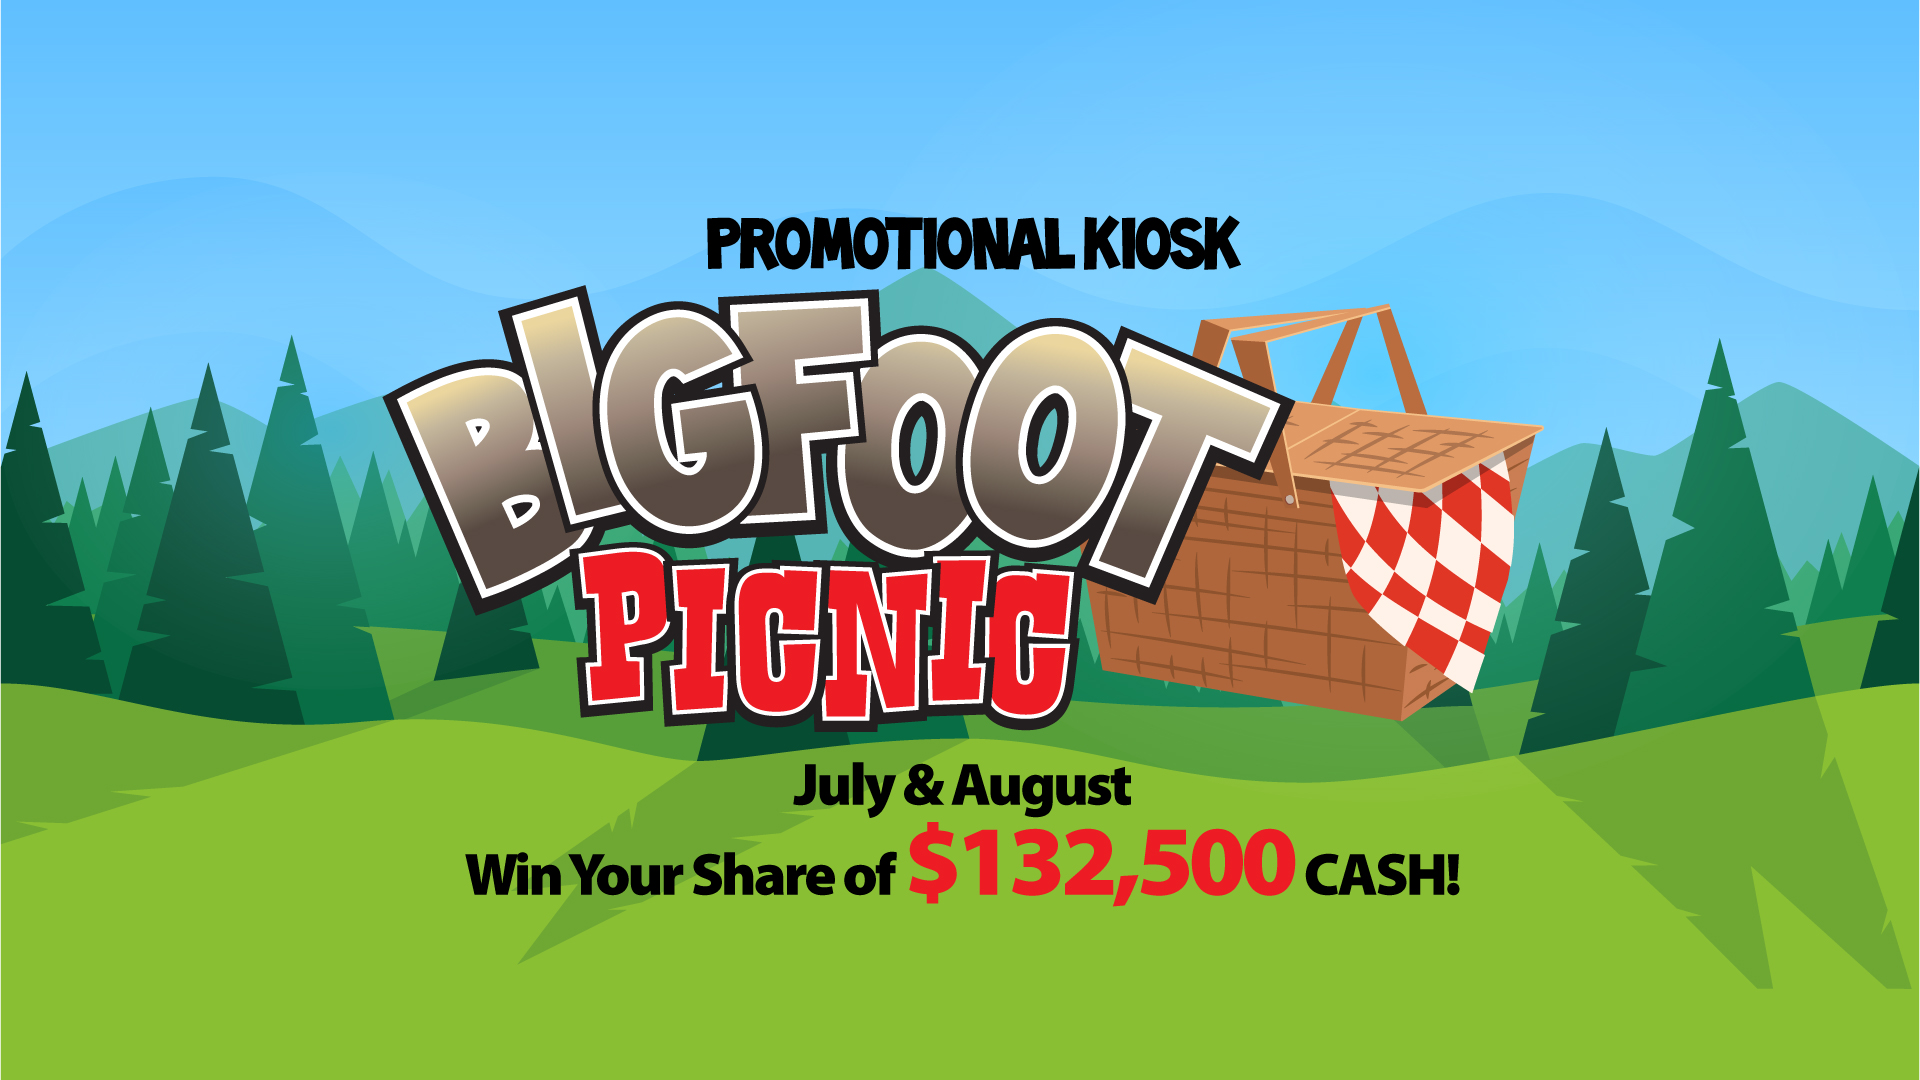 Big Foot Picnic- Kiosk Promotion